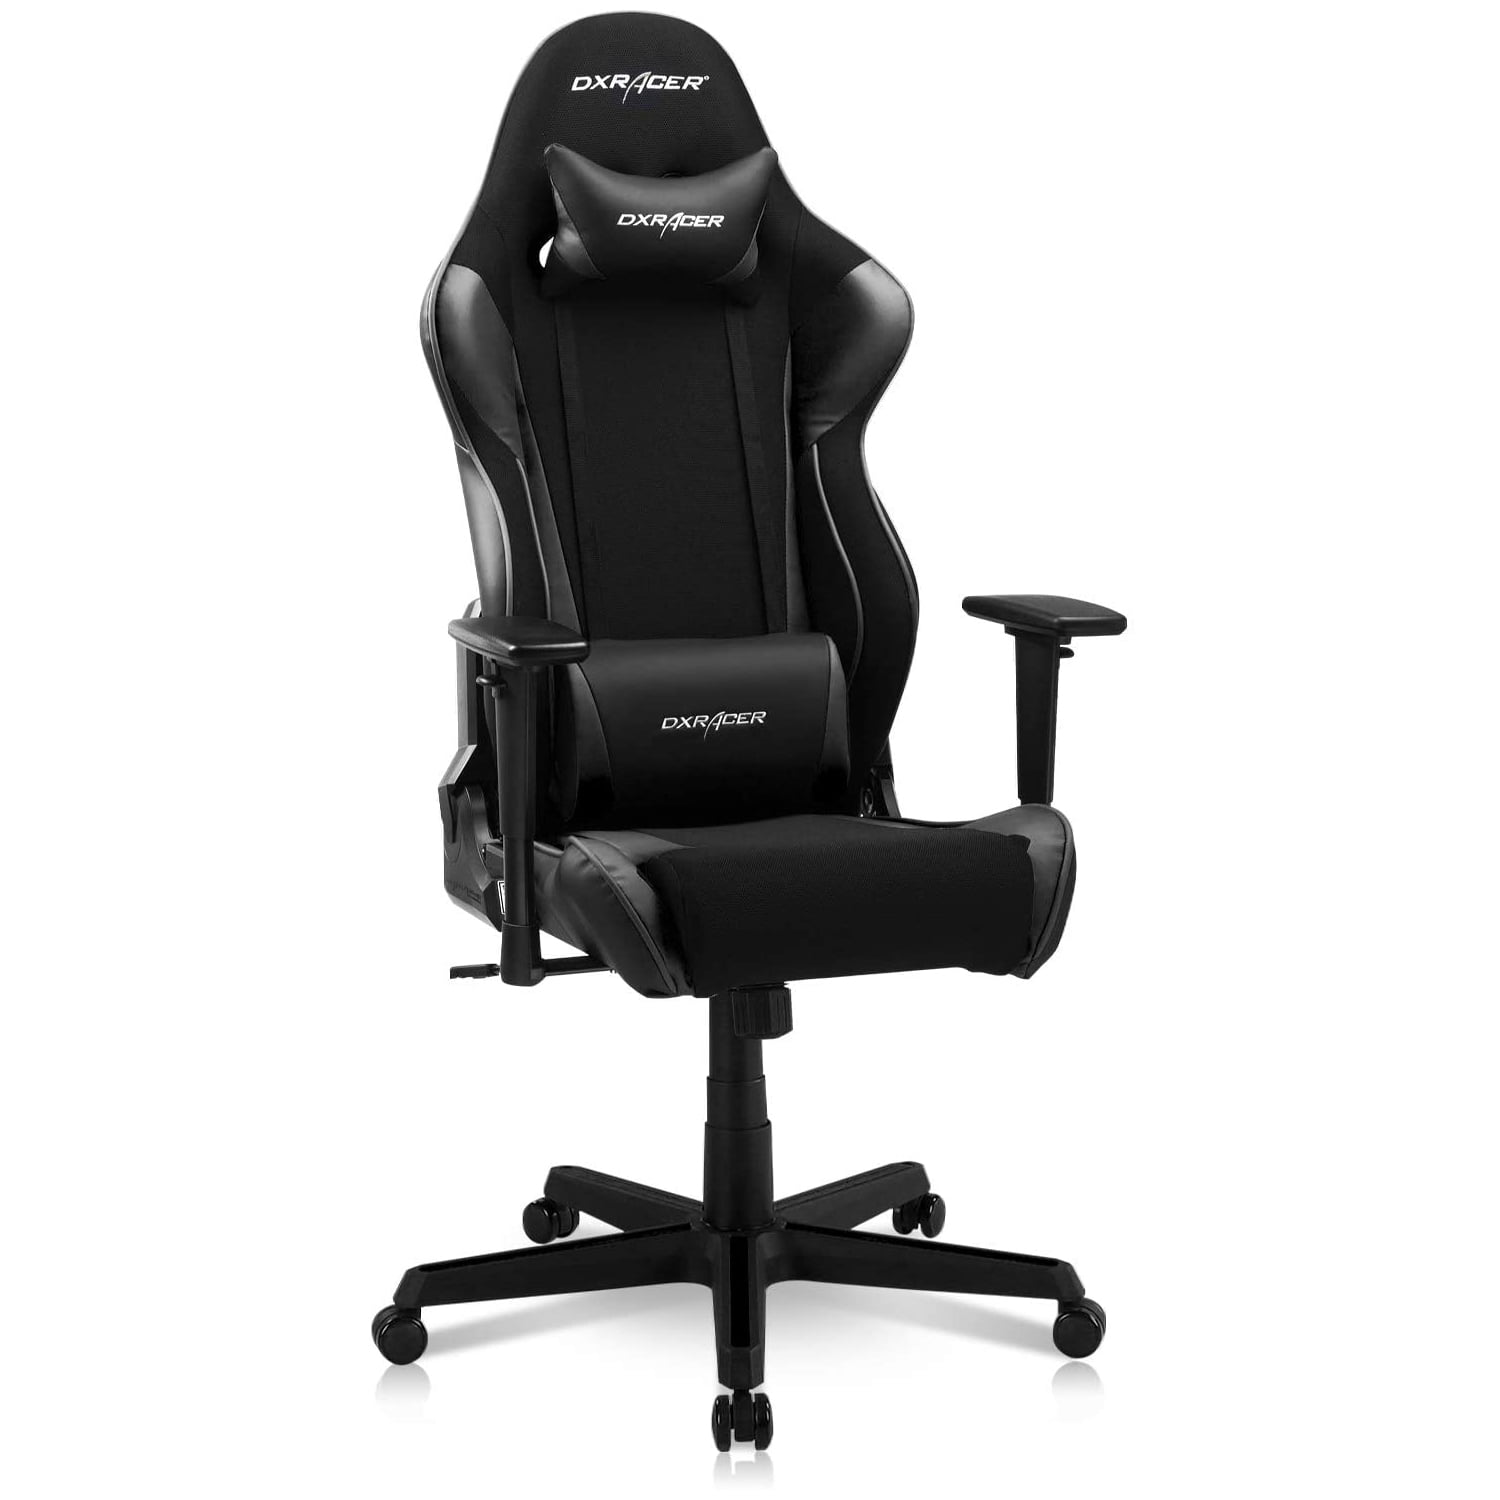 Dxracer Ergonomic High Back Gaming Chair Rocker Black Walmart Com Walmart Com